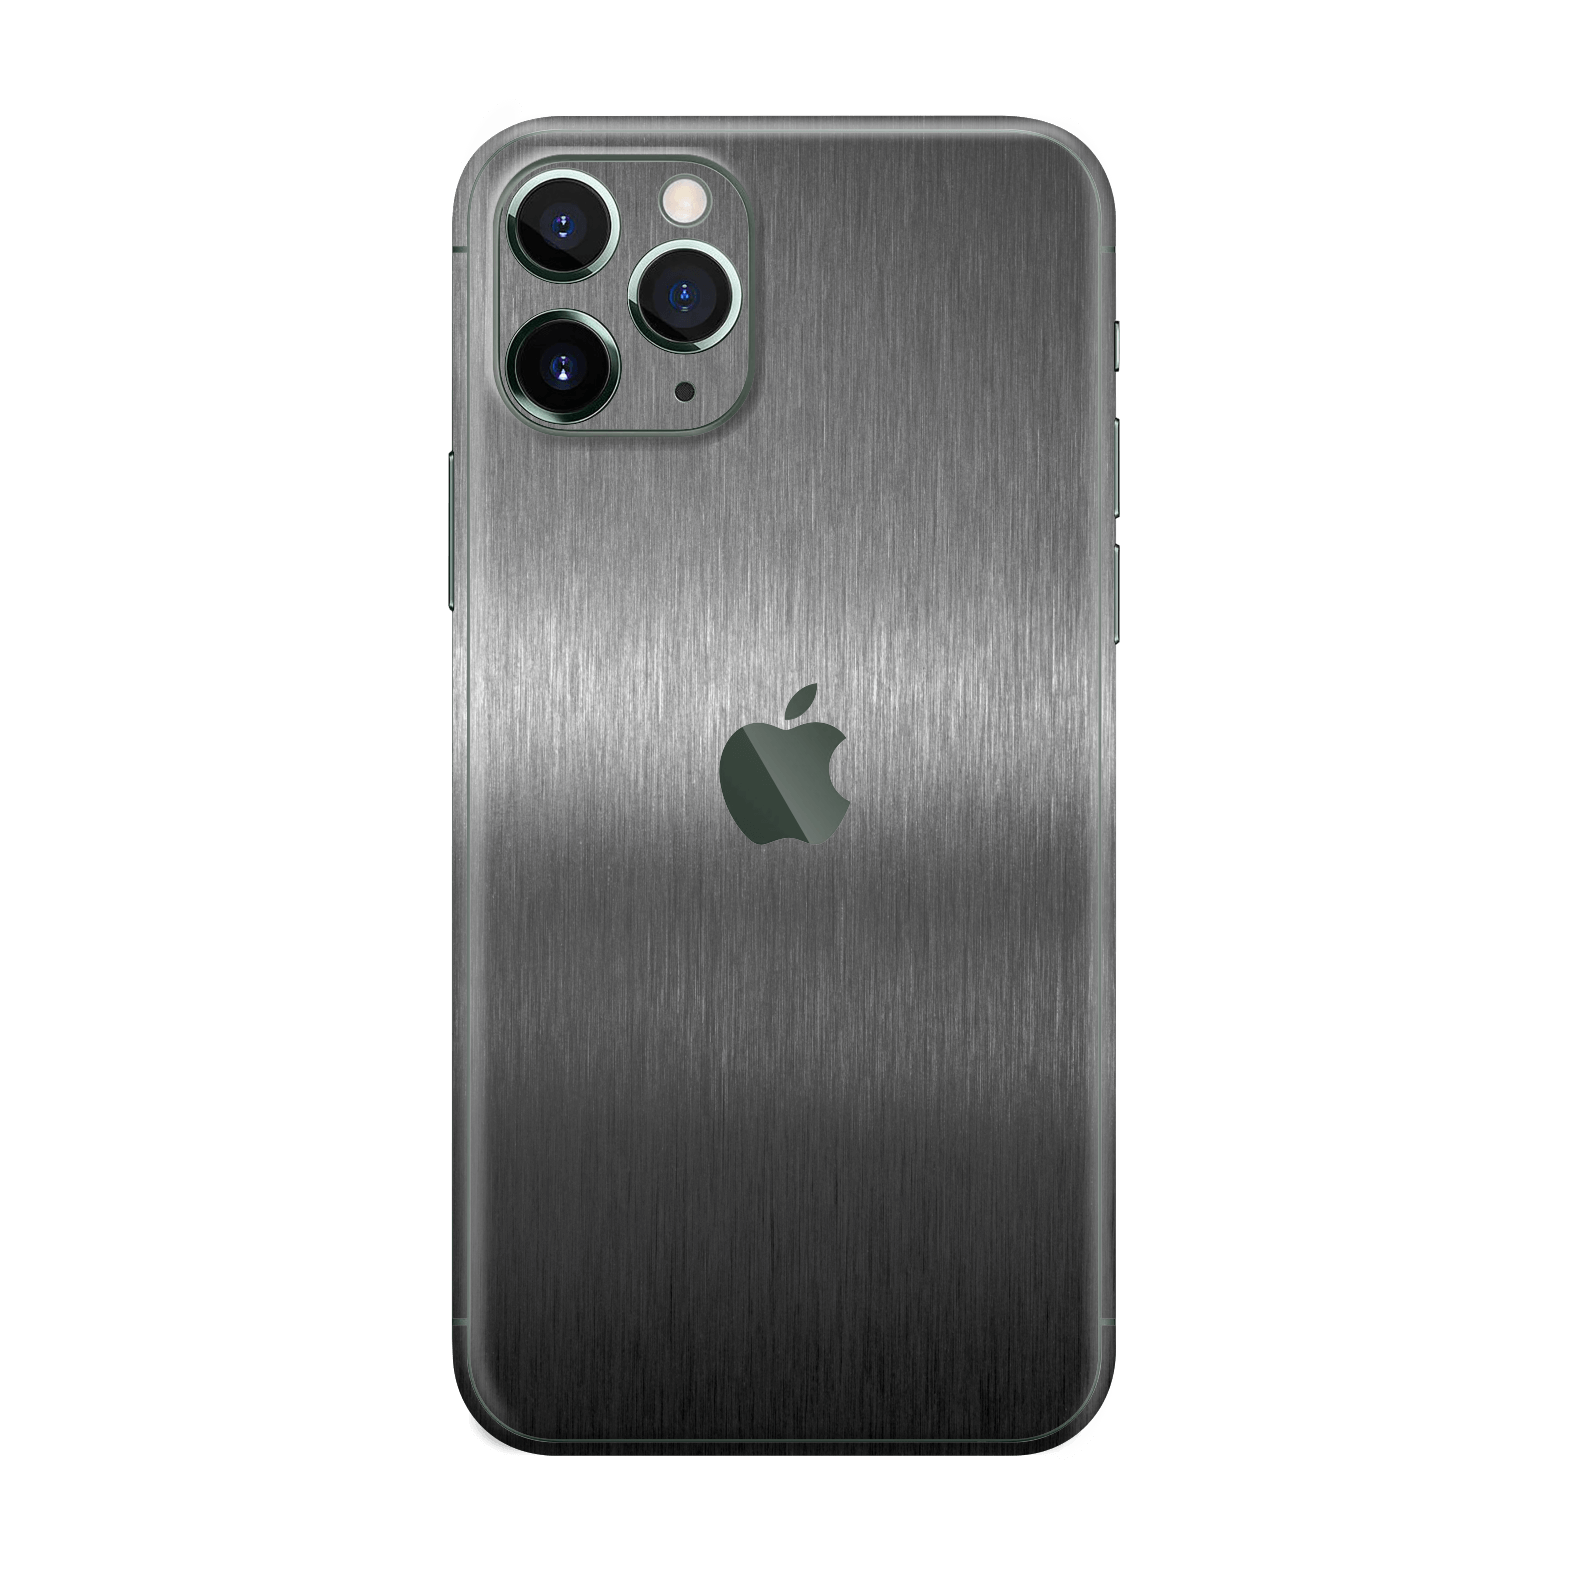 iPhone 11 Pro MAX Brushed Metal Titanium Metallic Skin Wrap Sticker Decal Cover Protector by EasySkinz | EasySkinz.com